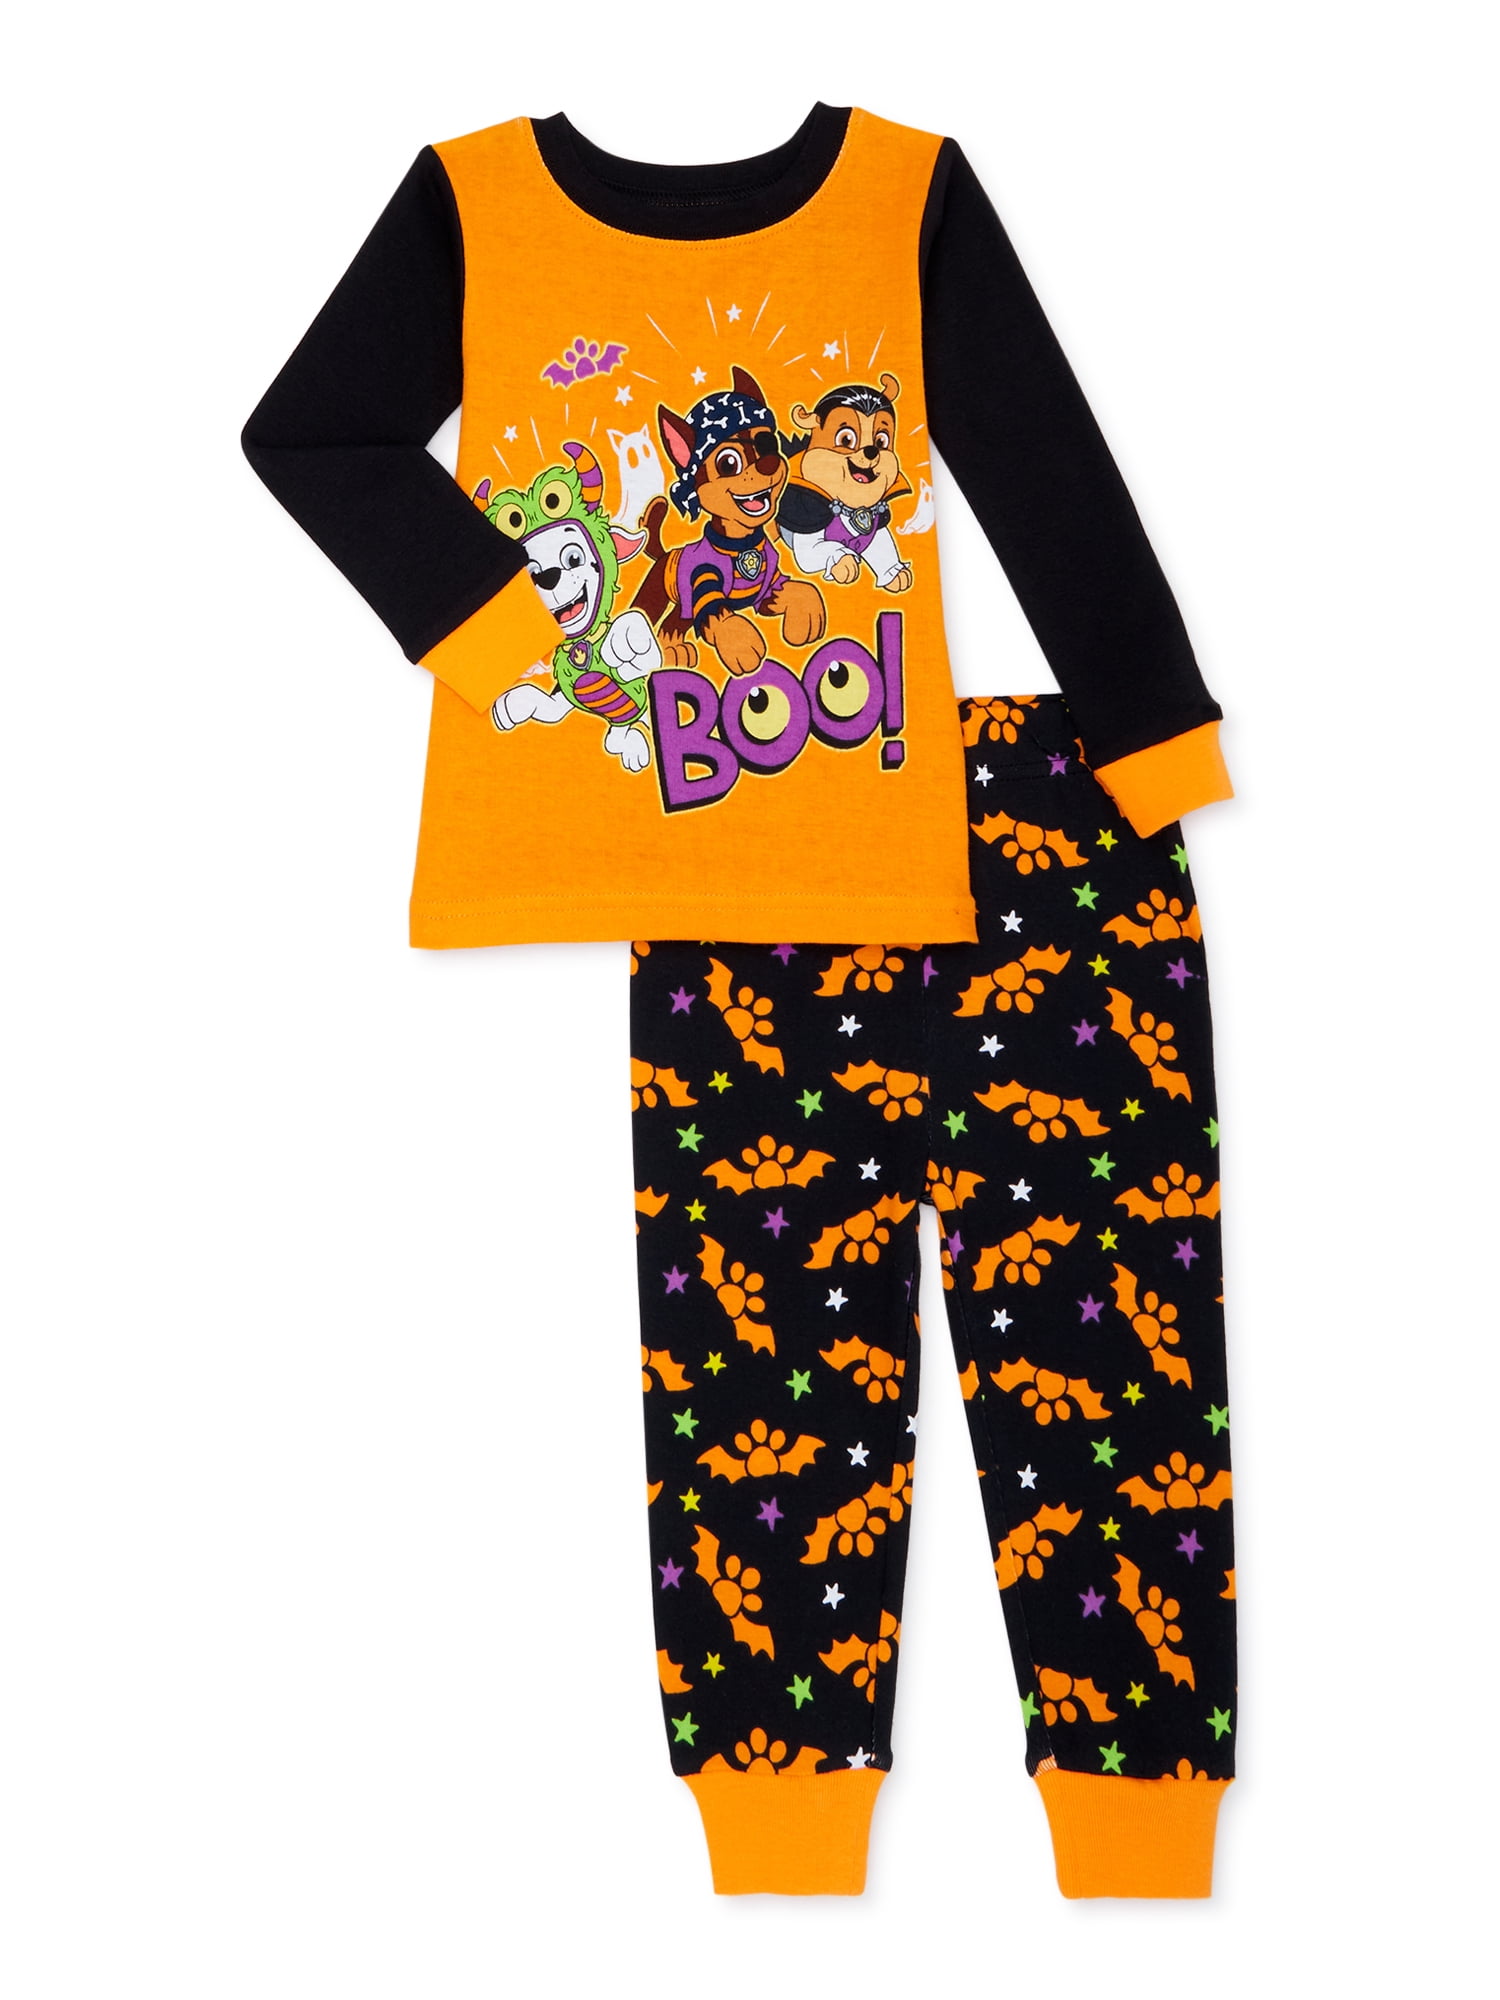 Paw Patrol Pajamas 2-Piece Snug Fit Pup Power PJs for Toddler Boys New NWT 